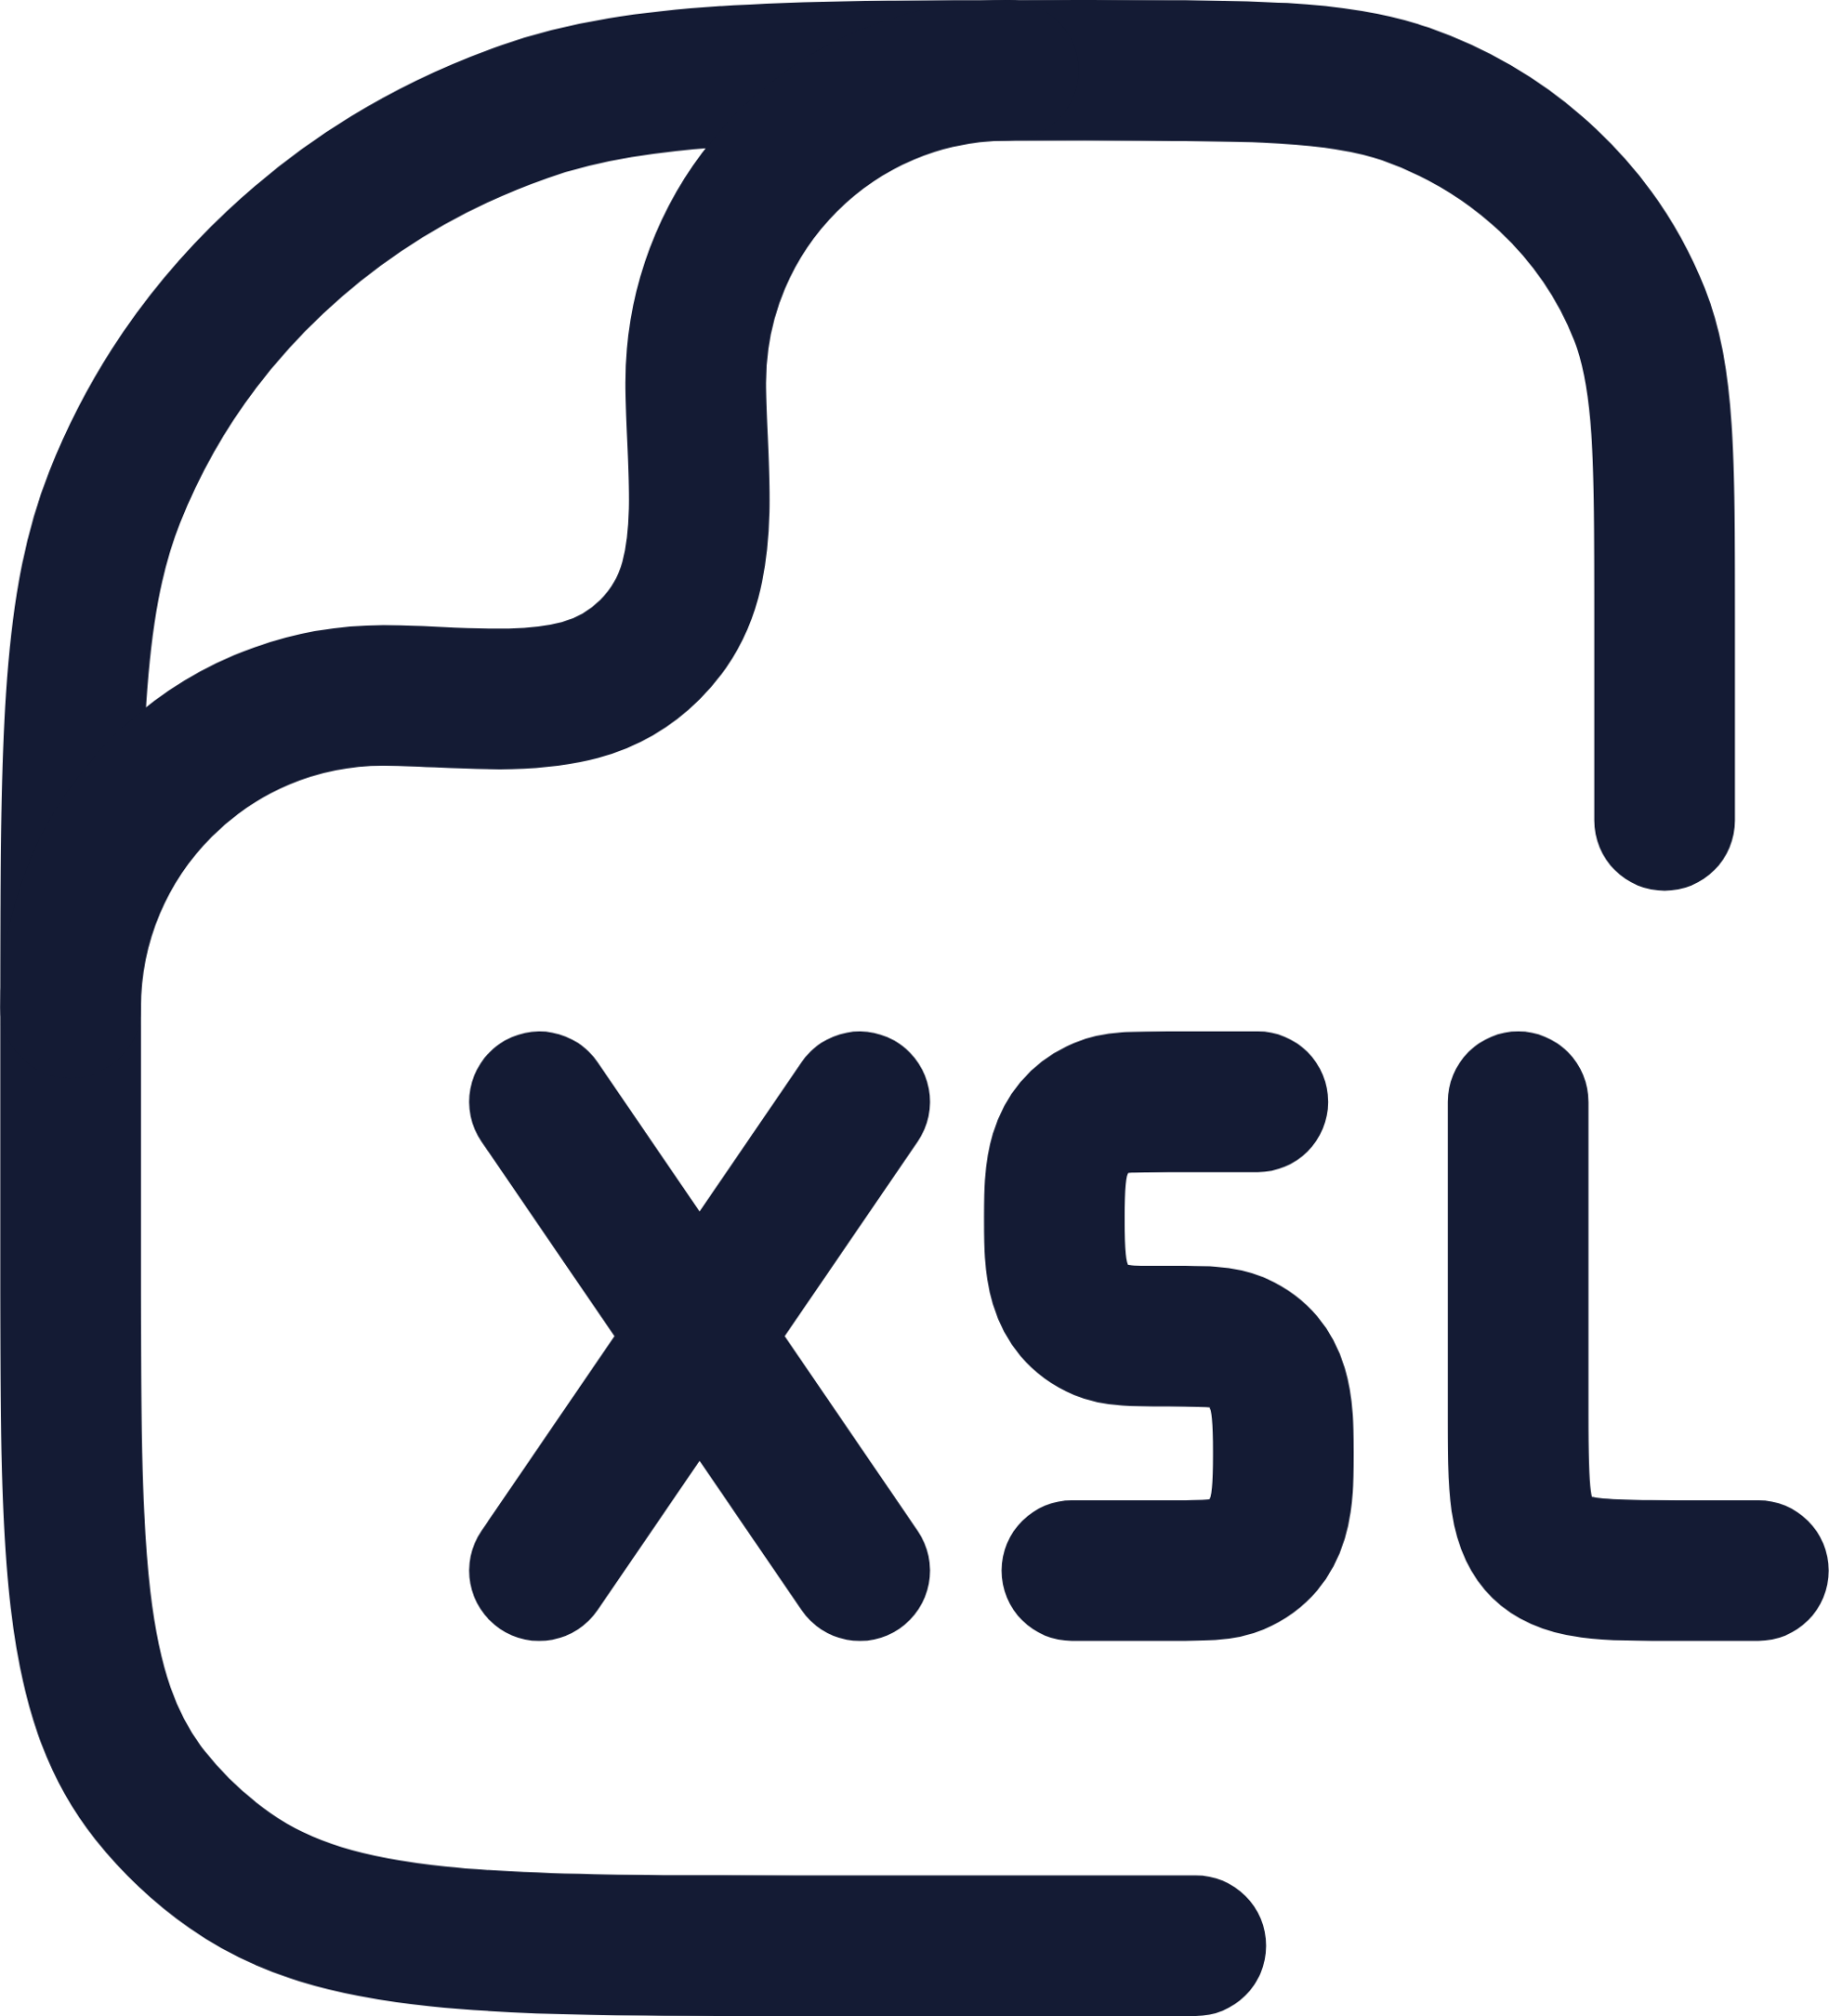 Blue XSL file document icon. Download xsl button - Royalty Free Stock ...